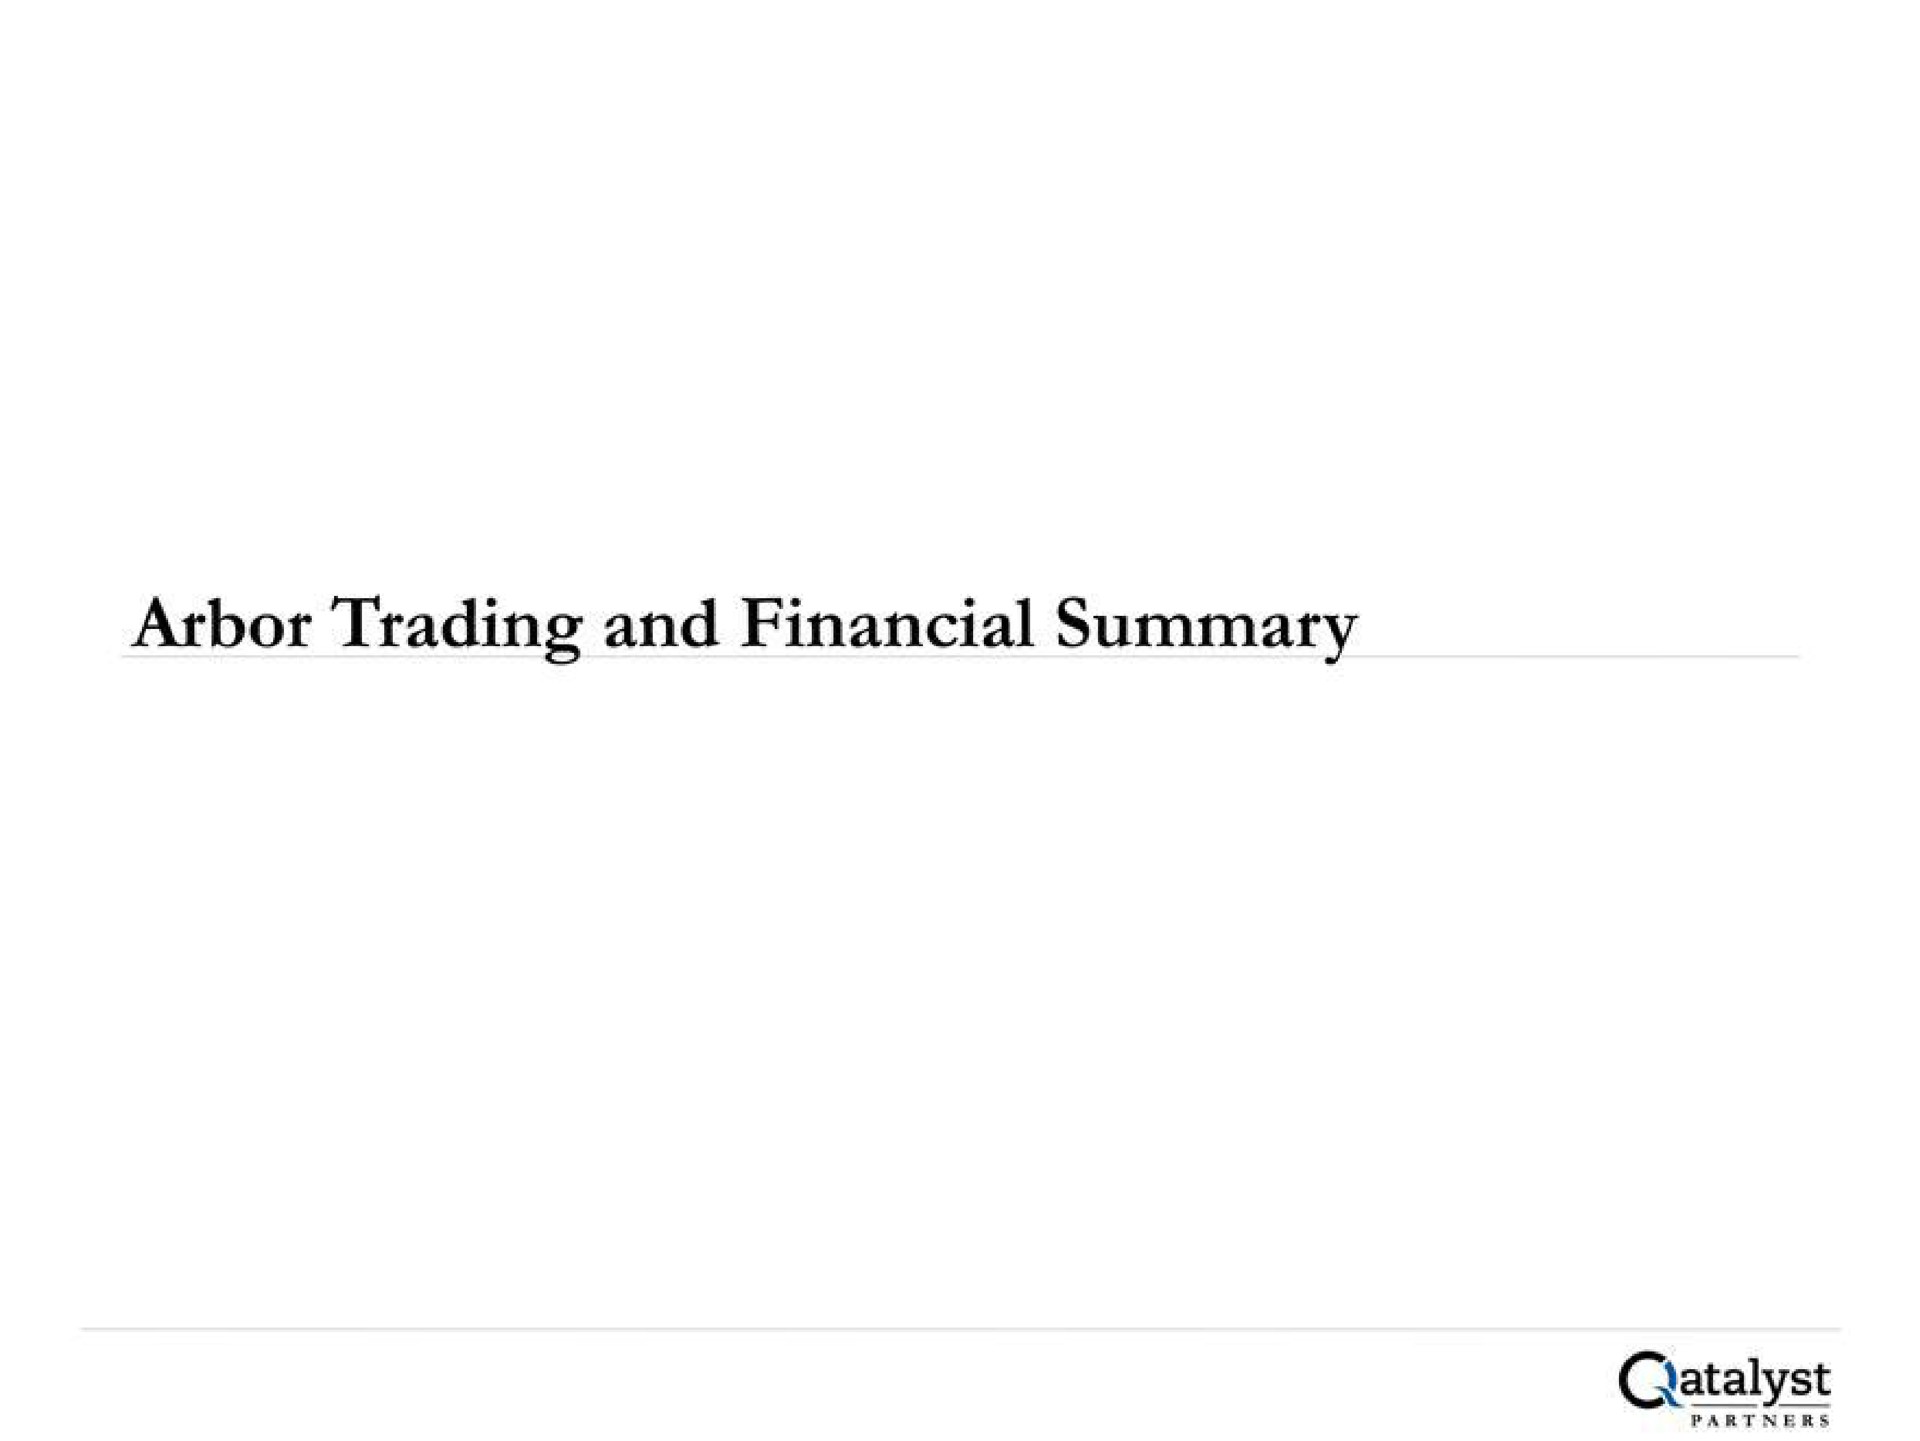 arbor trading and financial summary | Qatalyst Partners